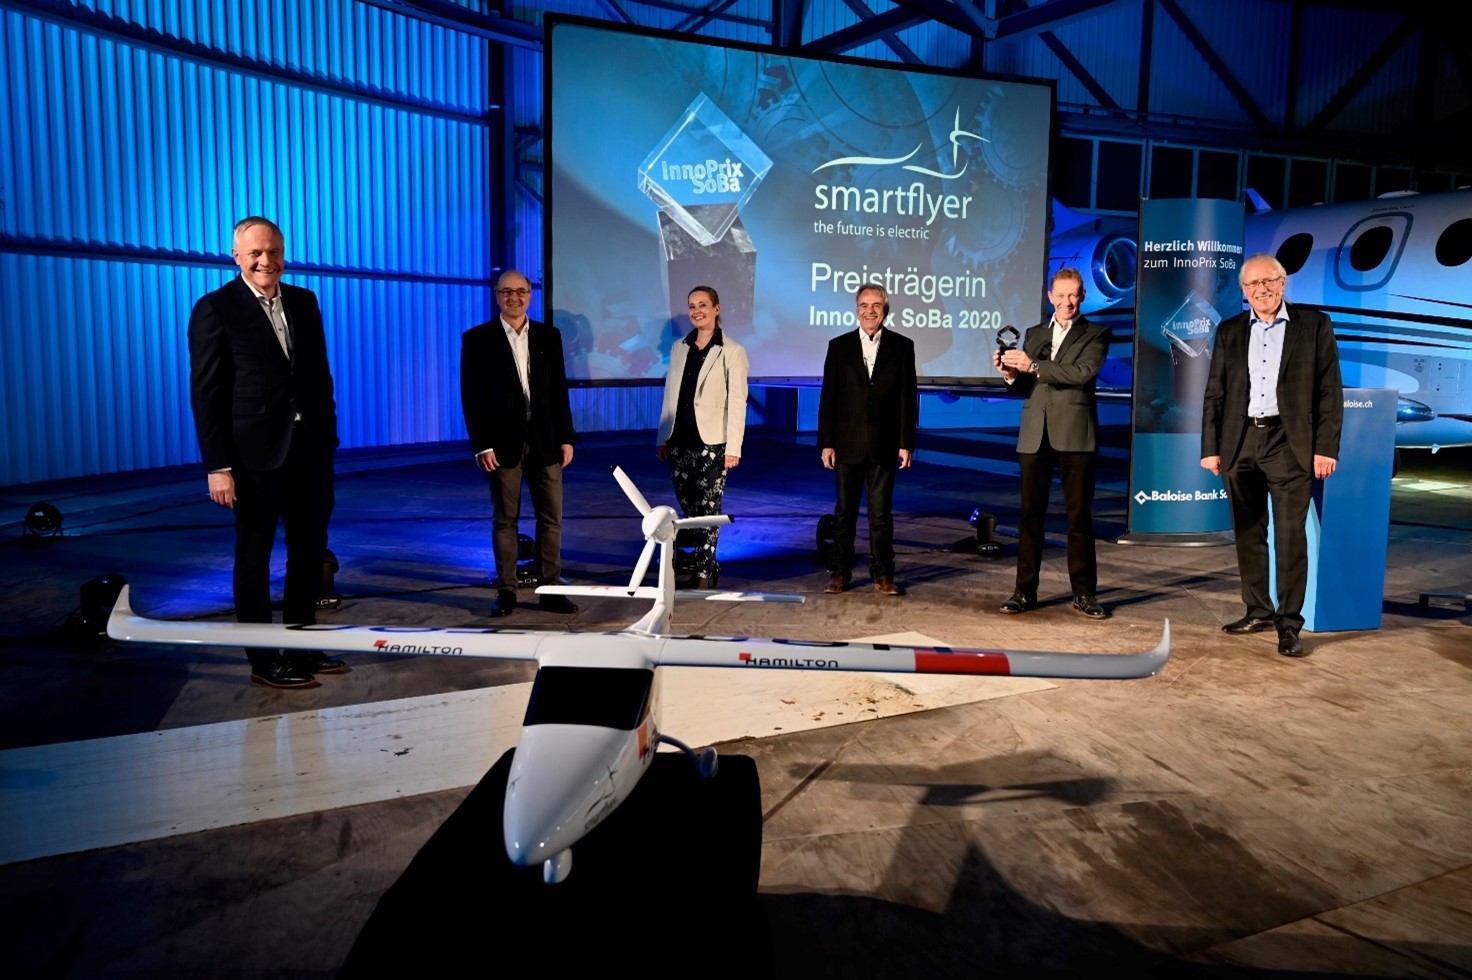 Smartflyer aircraft awarded the InnoPrix SoBa 2020